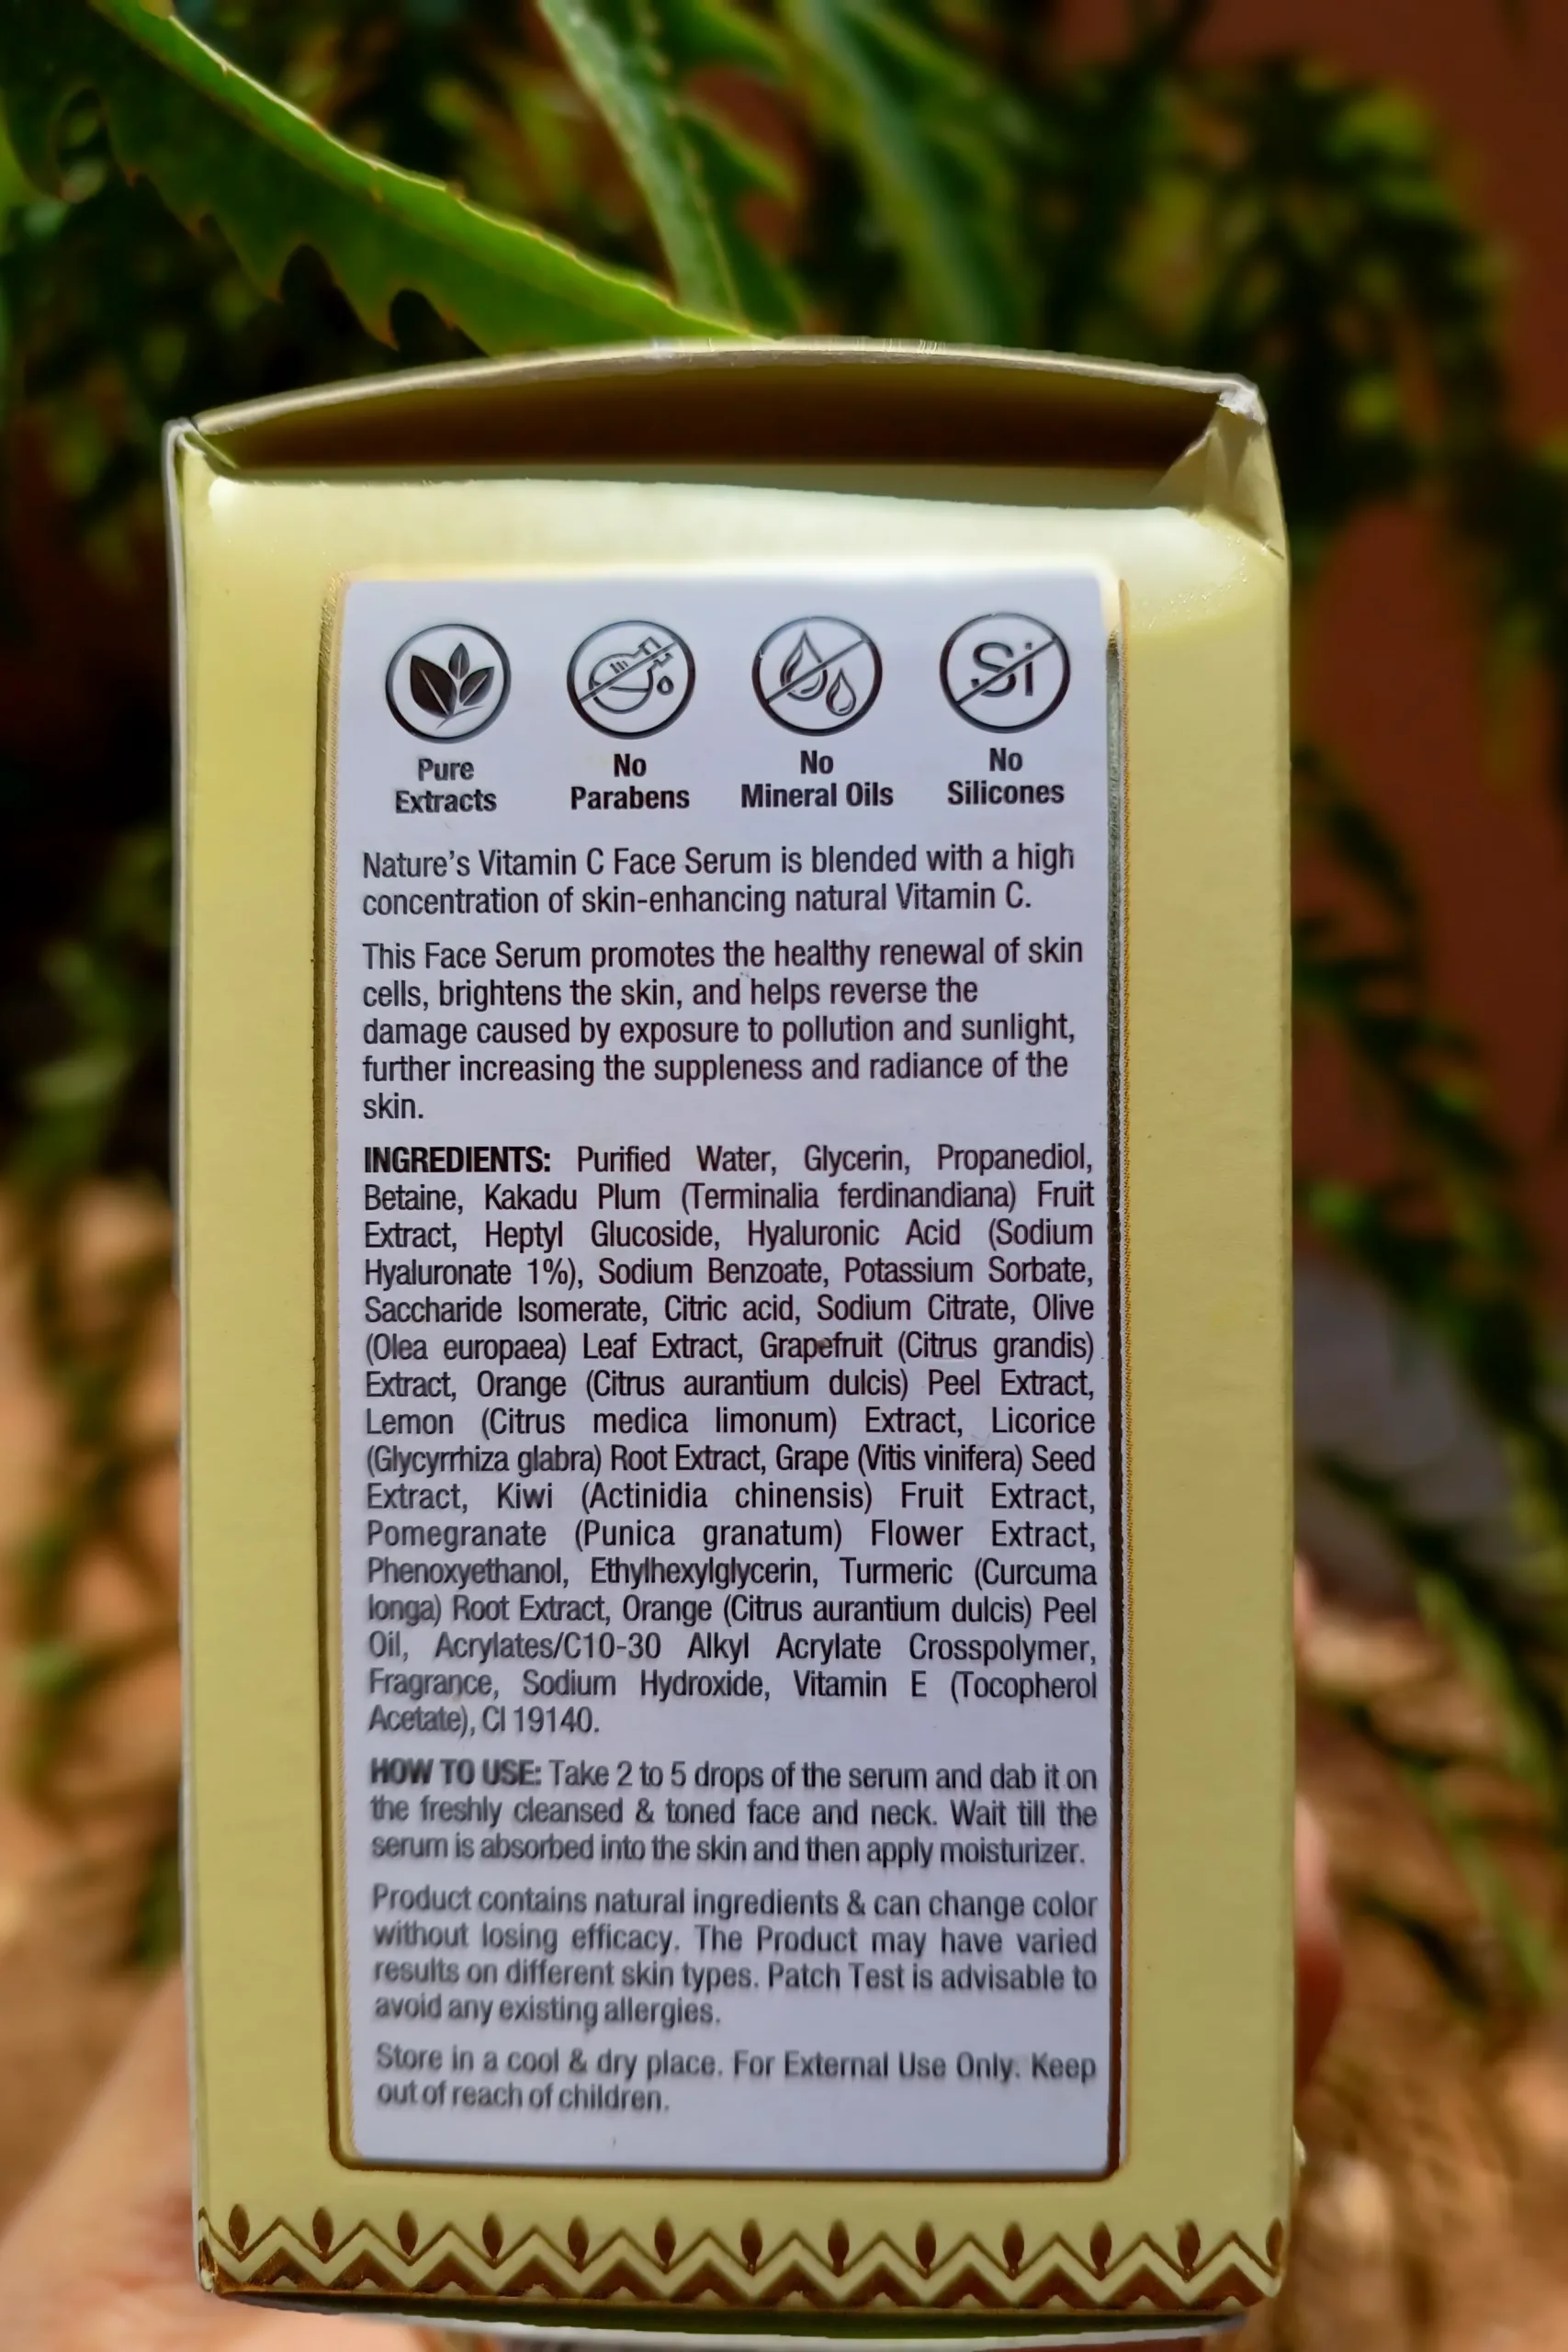 Ingredients of St.Botanica Oriental Botanics Nature's Vitamin C Face Serum